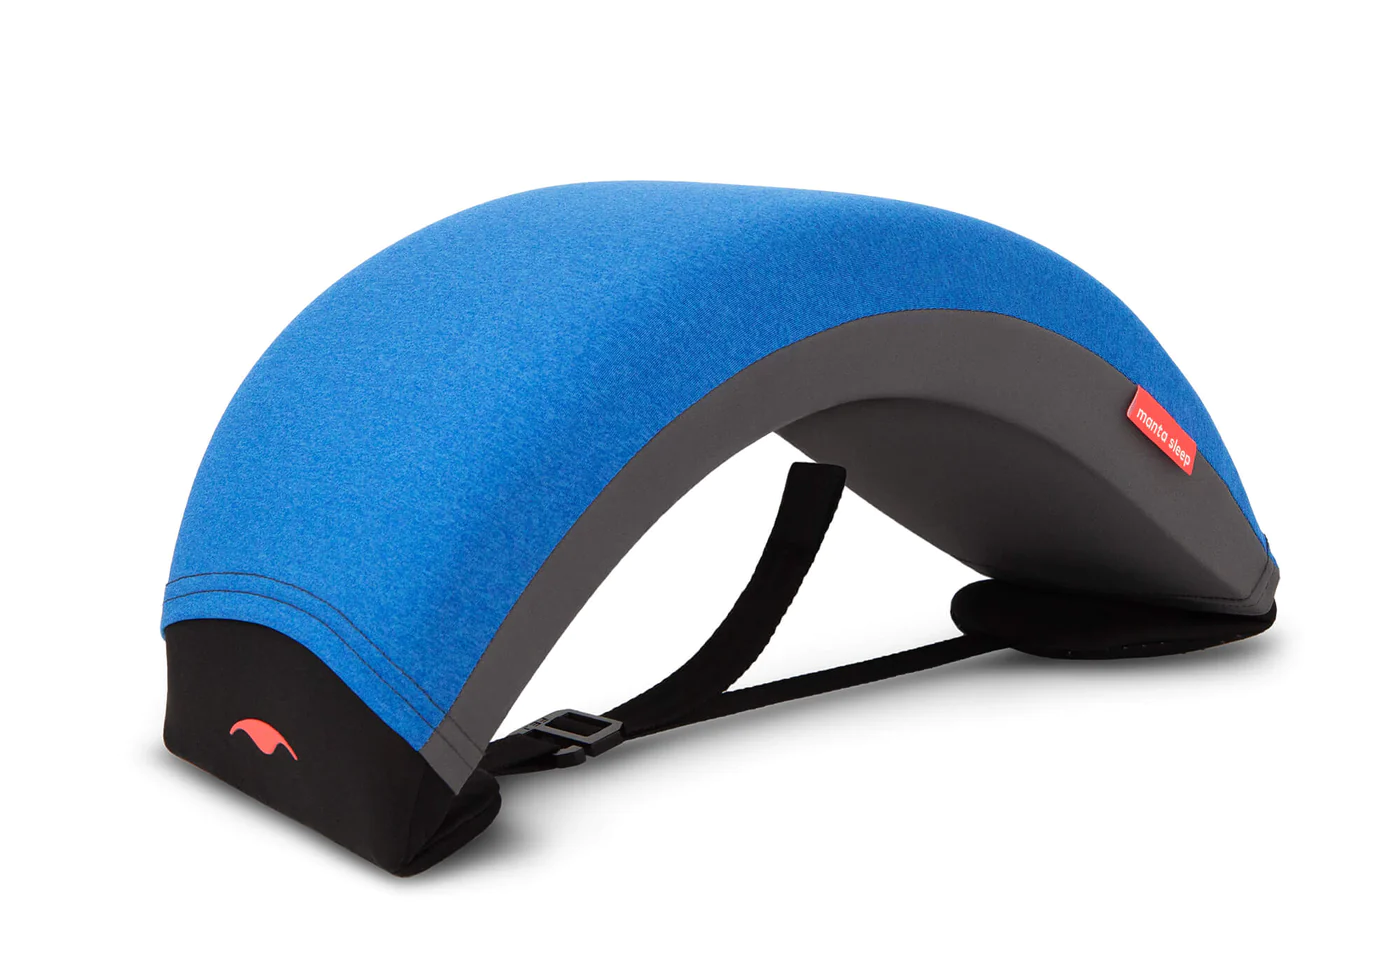 A blue nap pillow with an adjustable arc design.